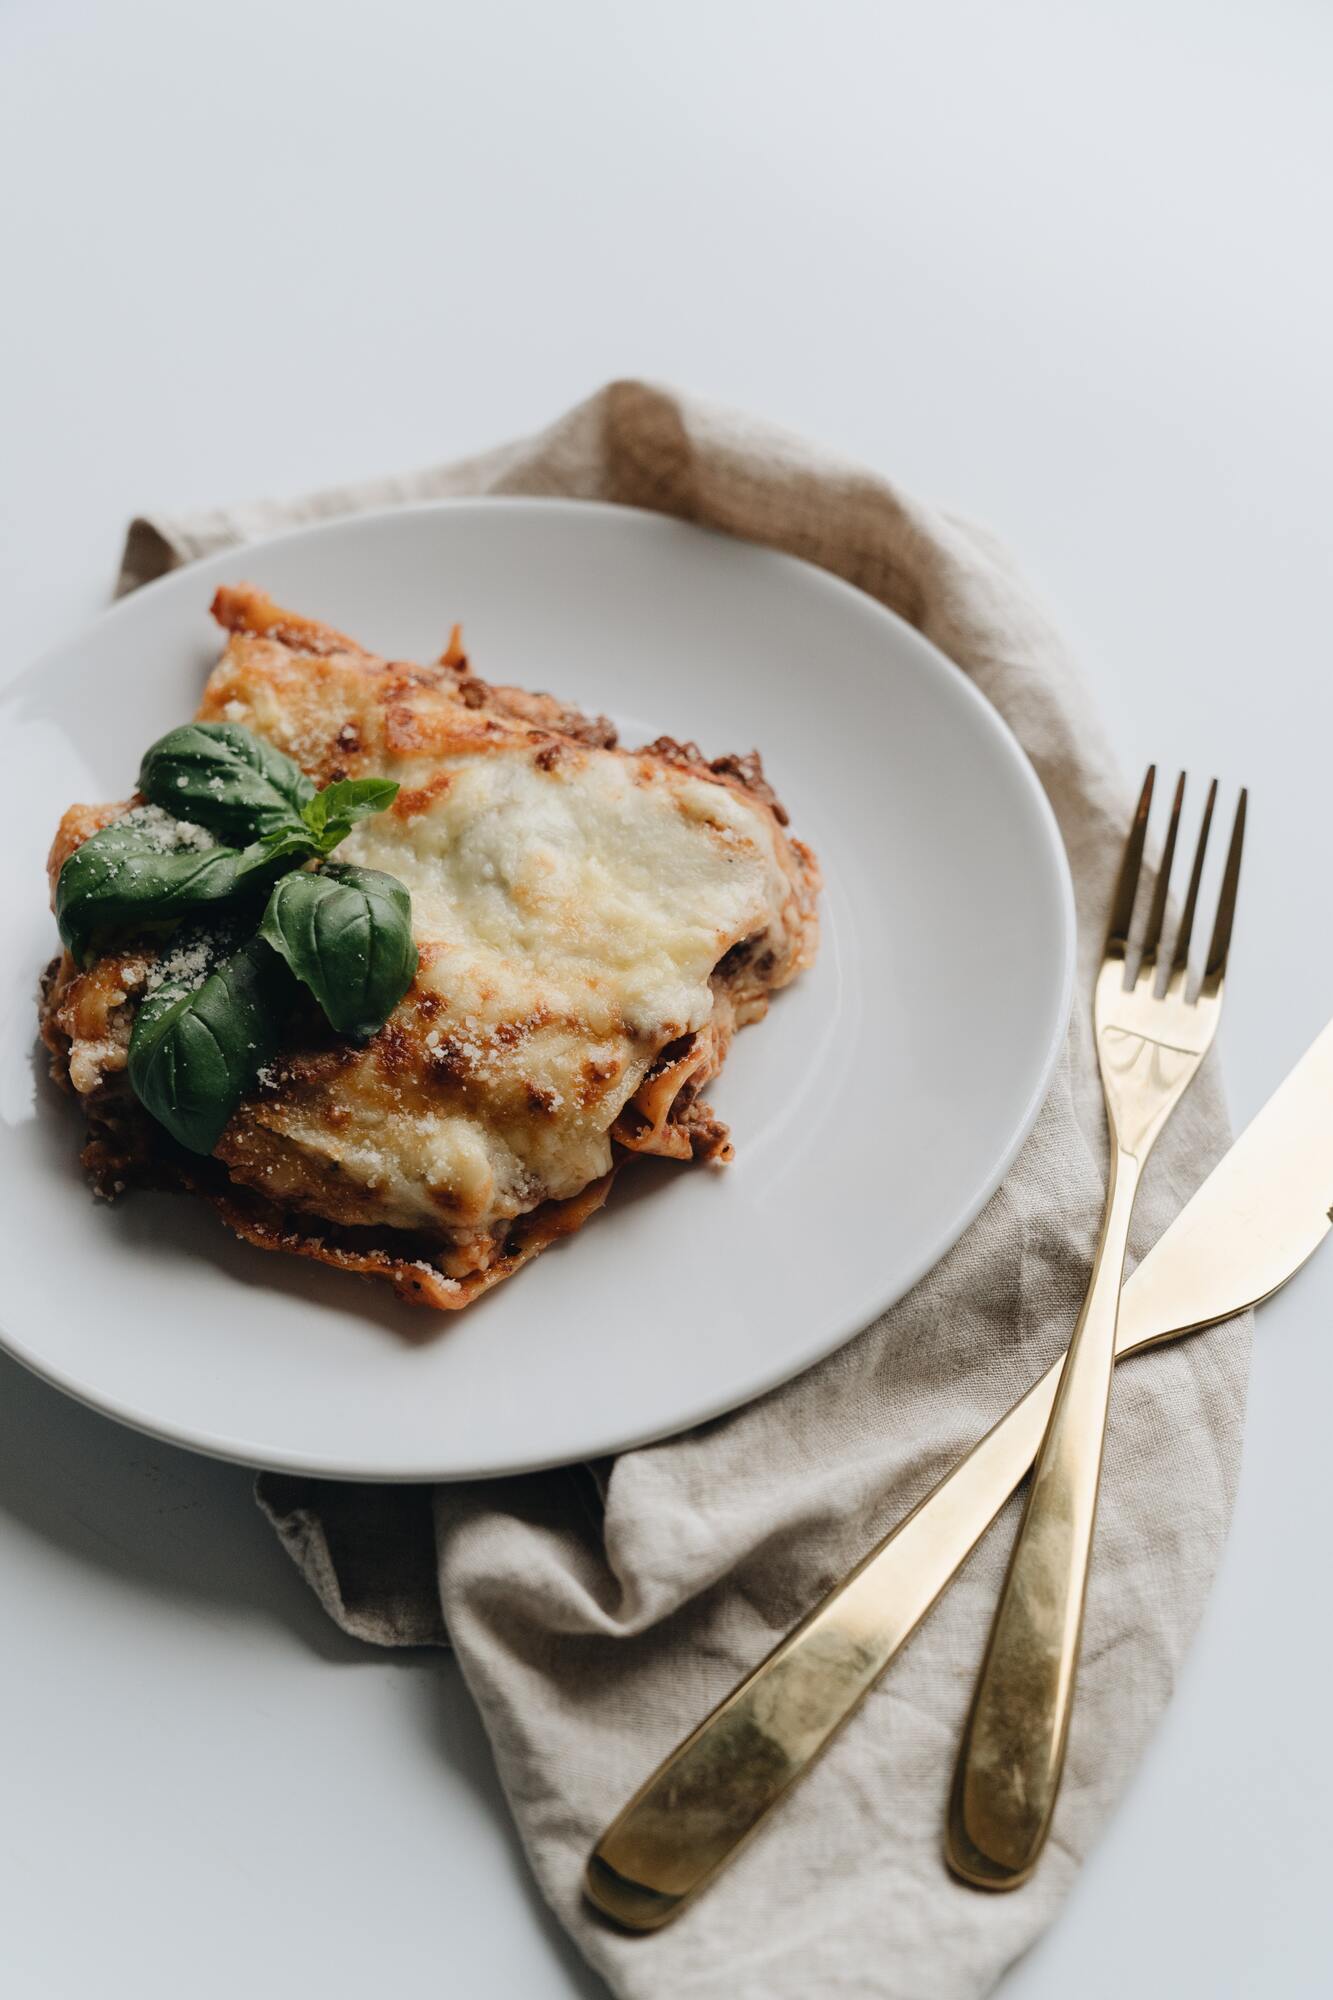 How to cook a delicious lasagna